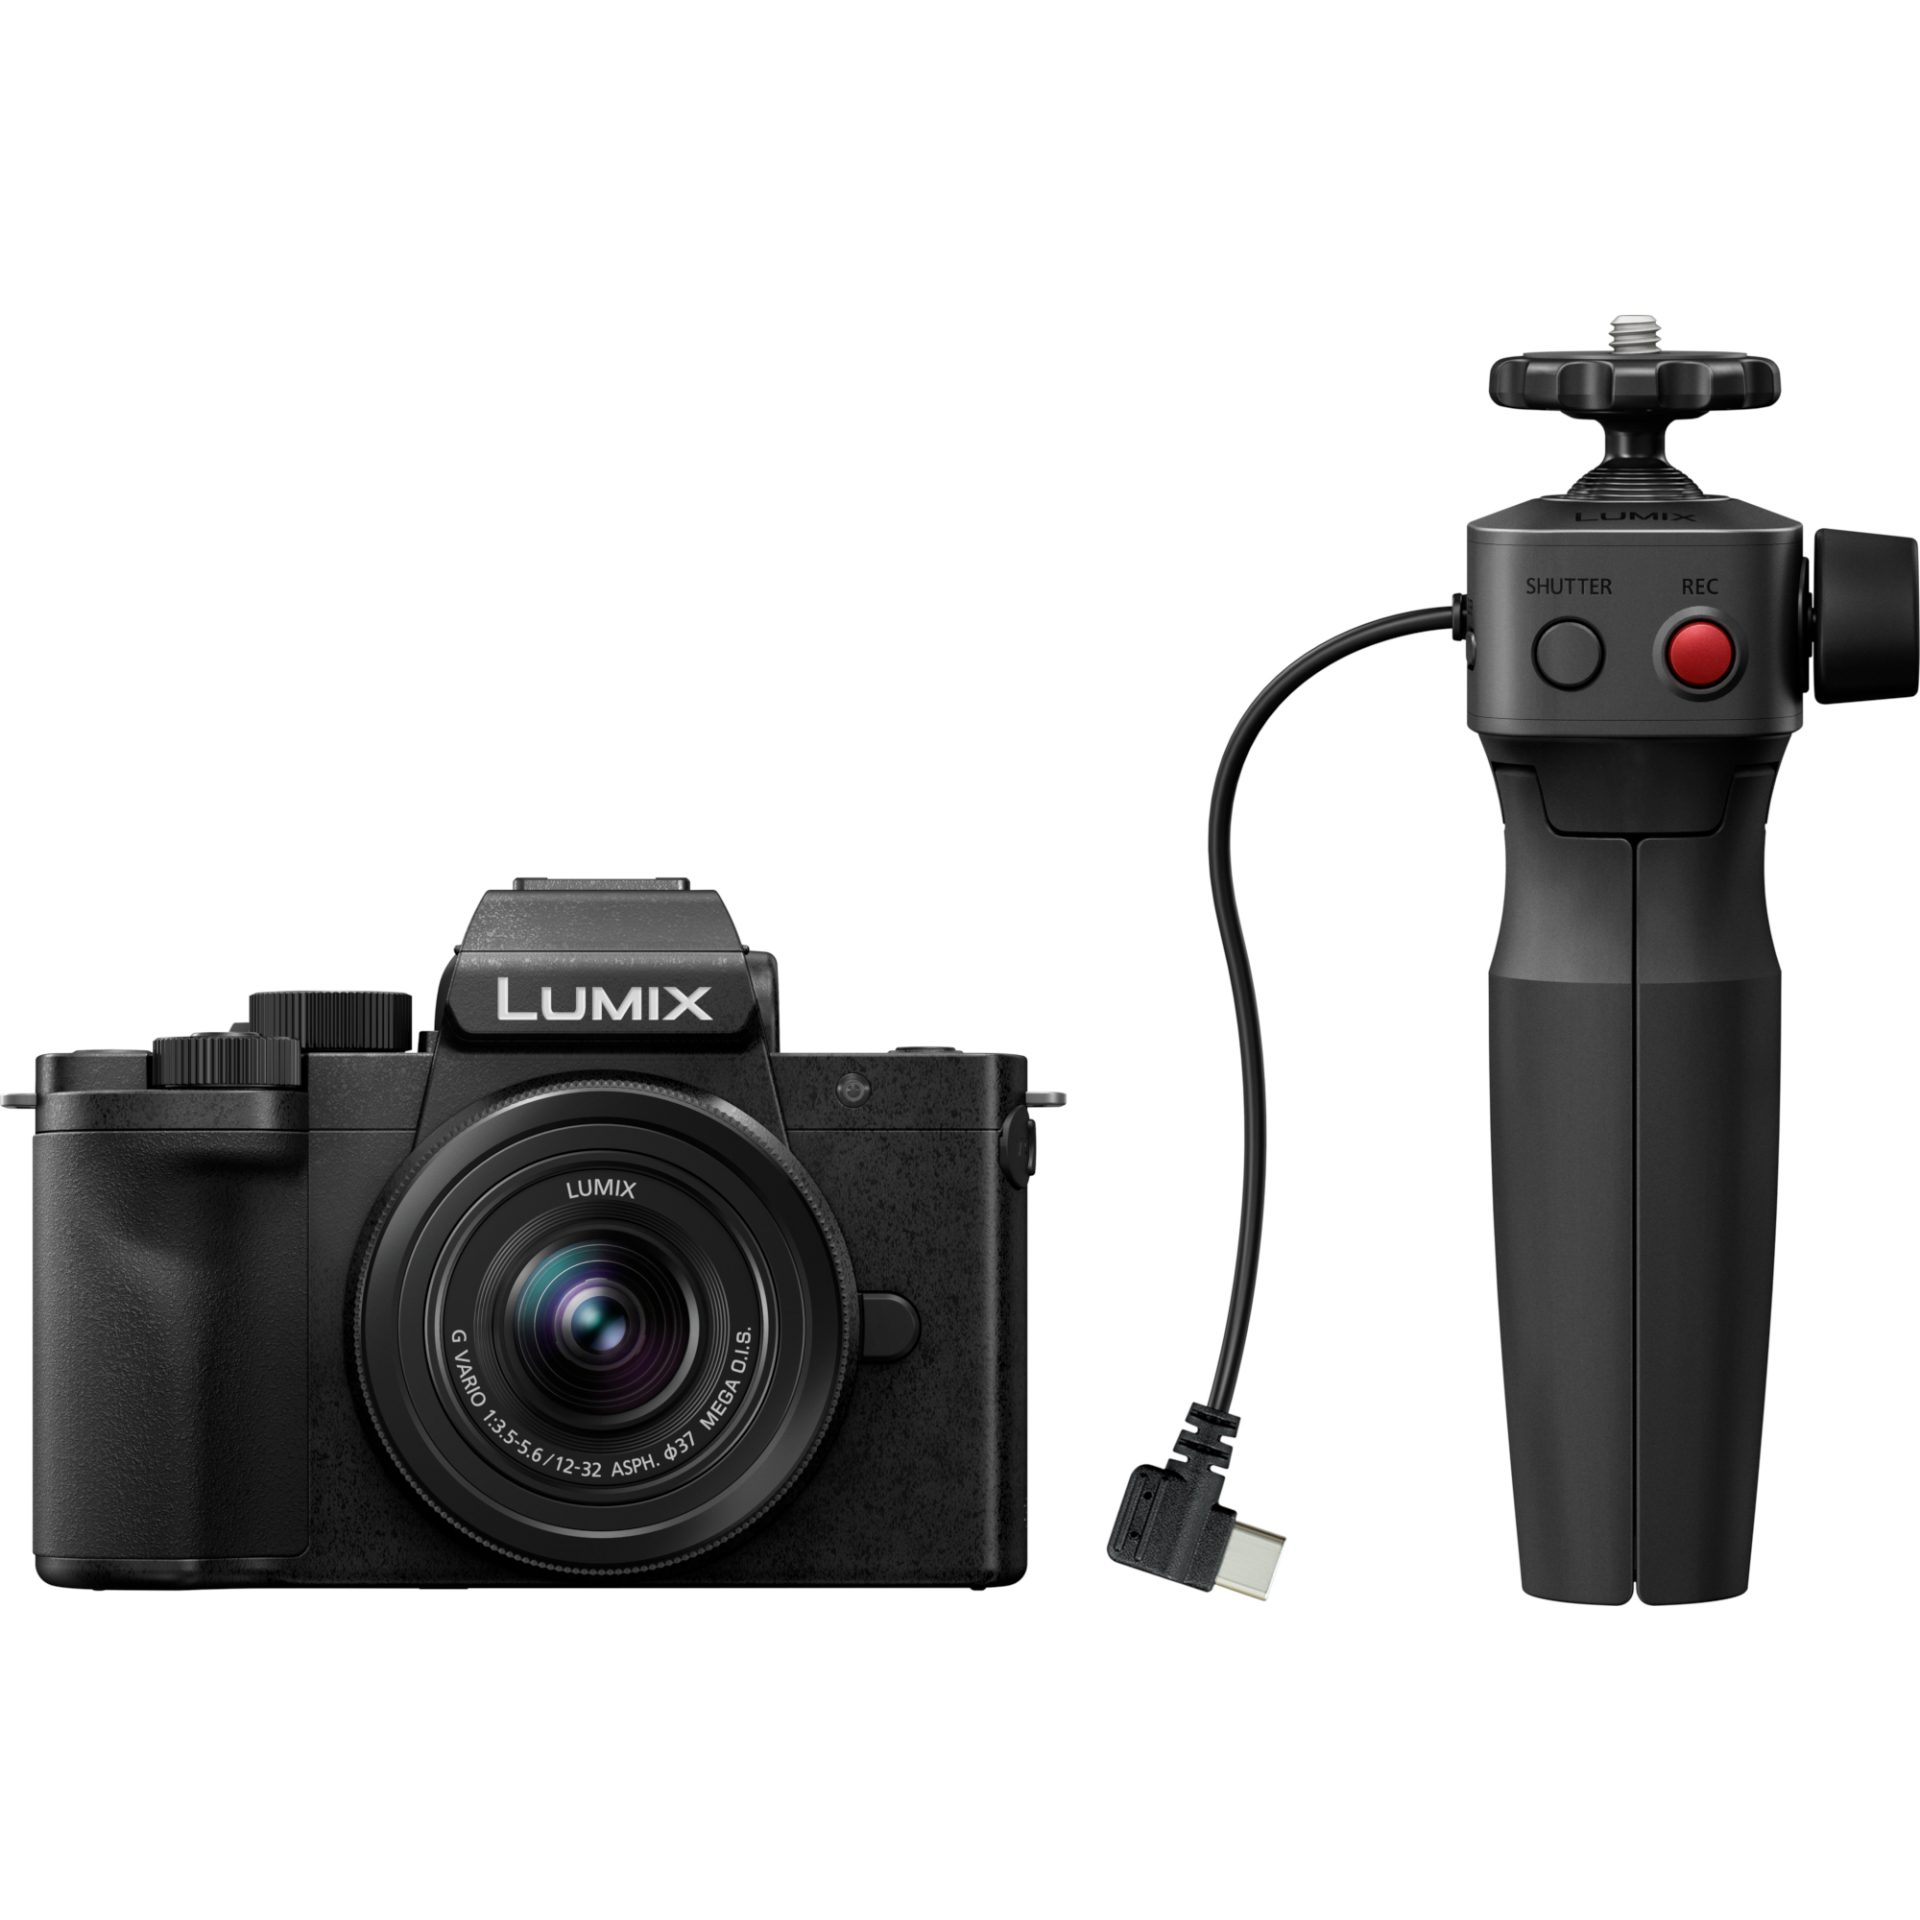 Panasonic DC-G100DV Lumix fotoaparát pro vlogery: tělo DC-G100D + H-FS12032 12-32mm, objektiv F3,5-5,6 + stativ DMW-SHGR2 (4K/30p a FHD/60p, USB typ C